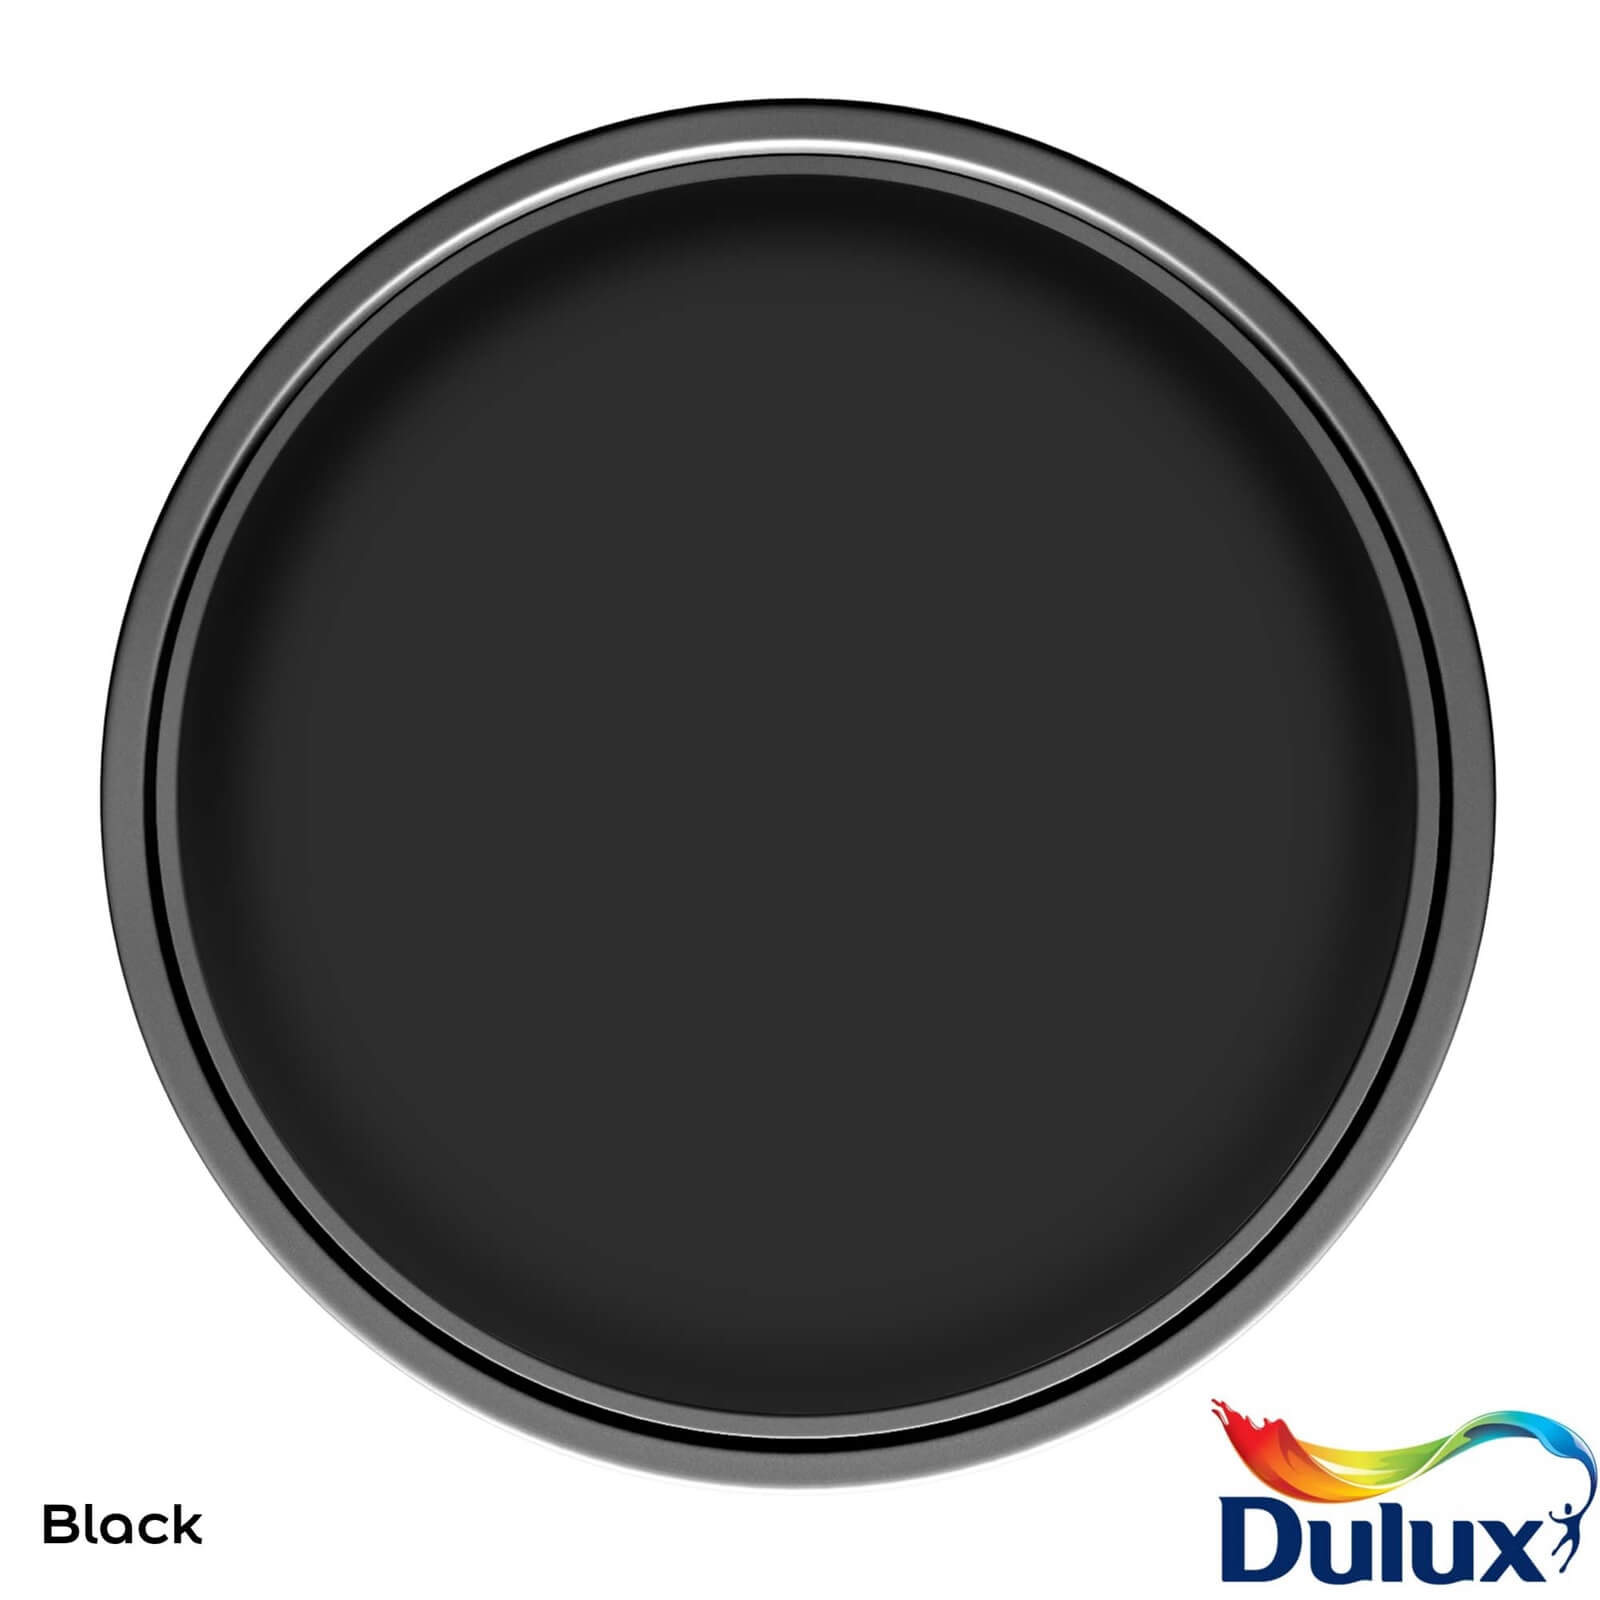 Dulux Weathershield Exterior Gloss Paint Black - 2.5L